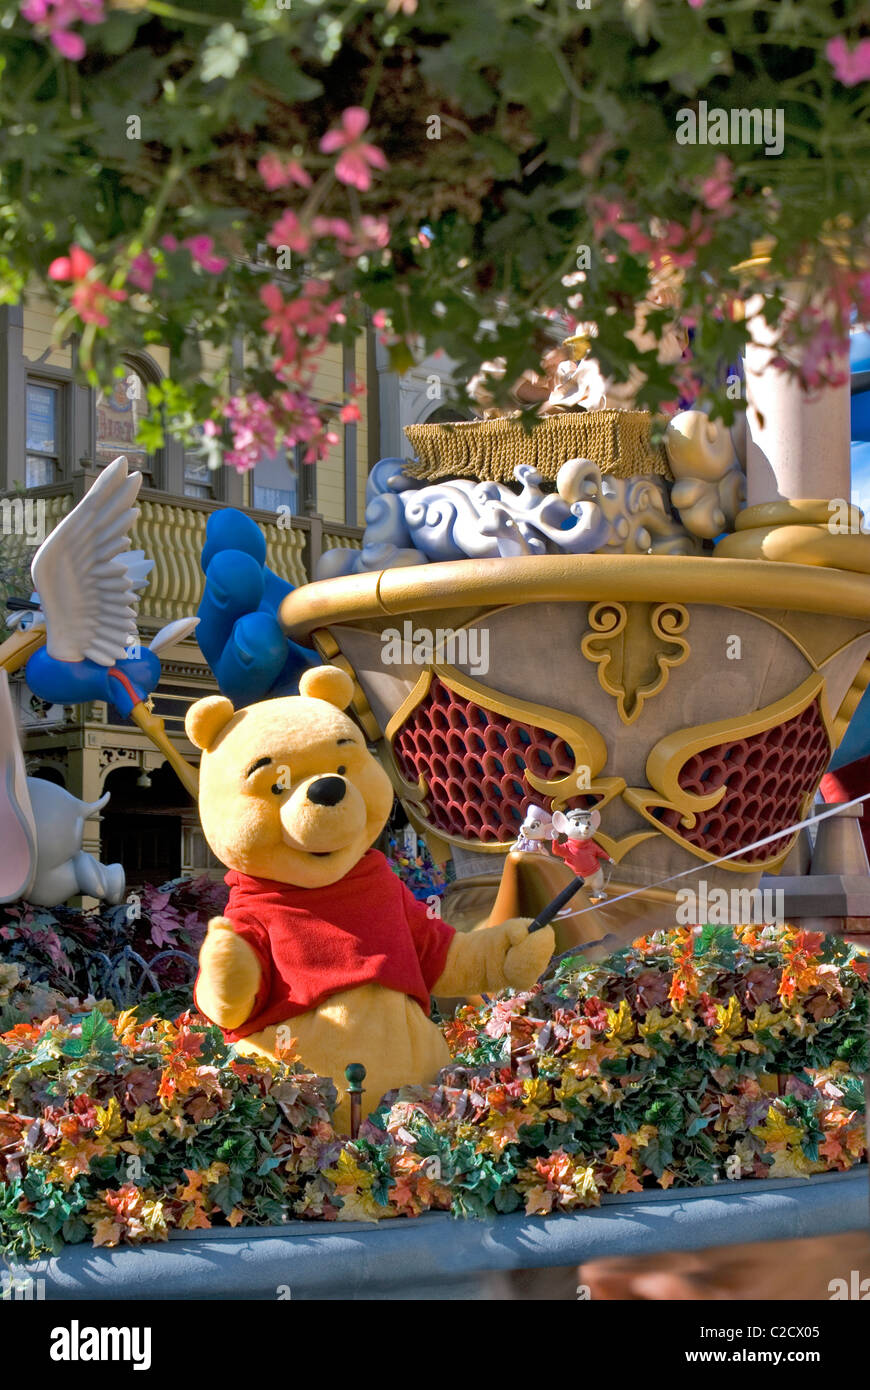 Winnie the Pooh on parade float, Walt Disney World resort, Orlando, Florida Stock Photo